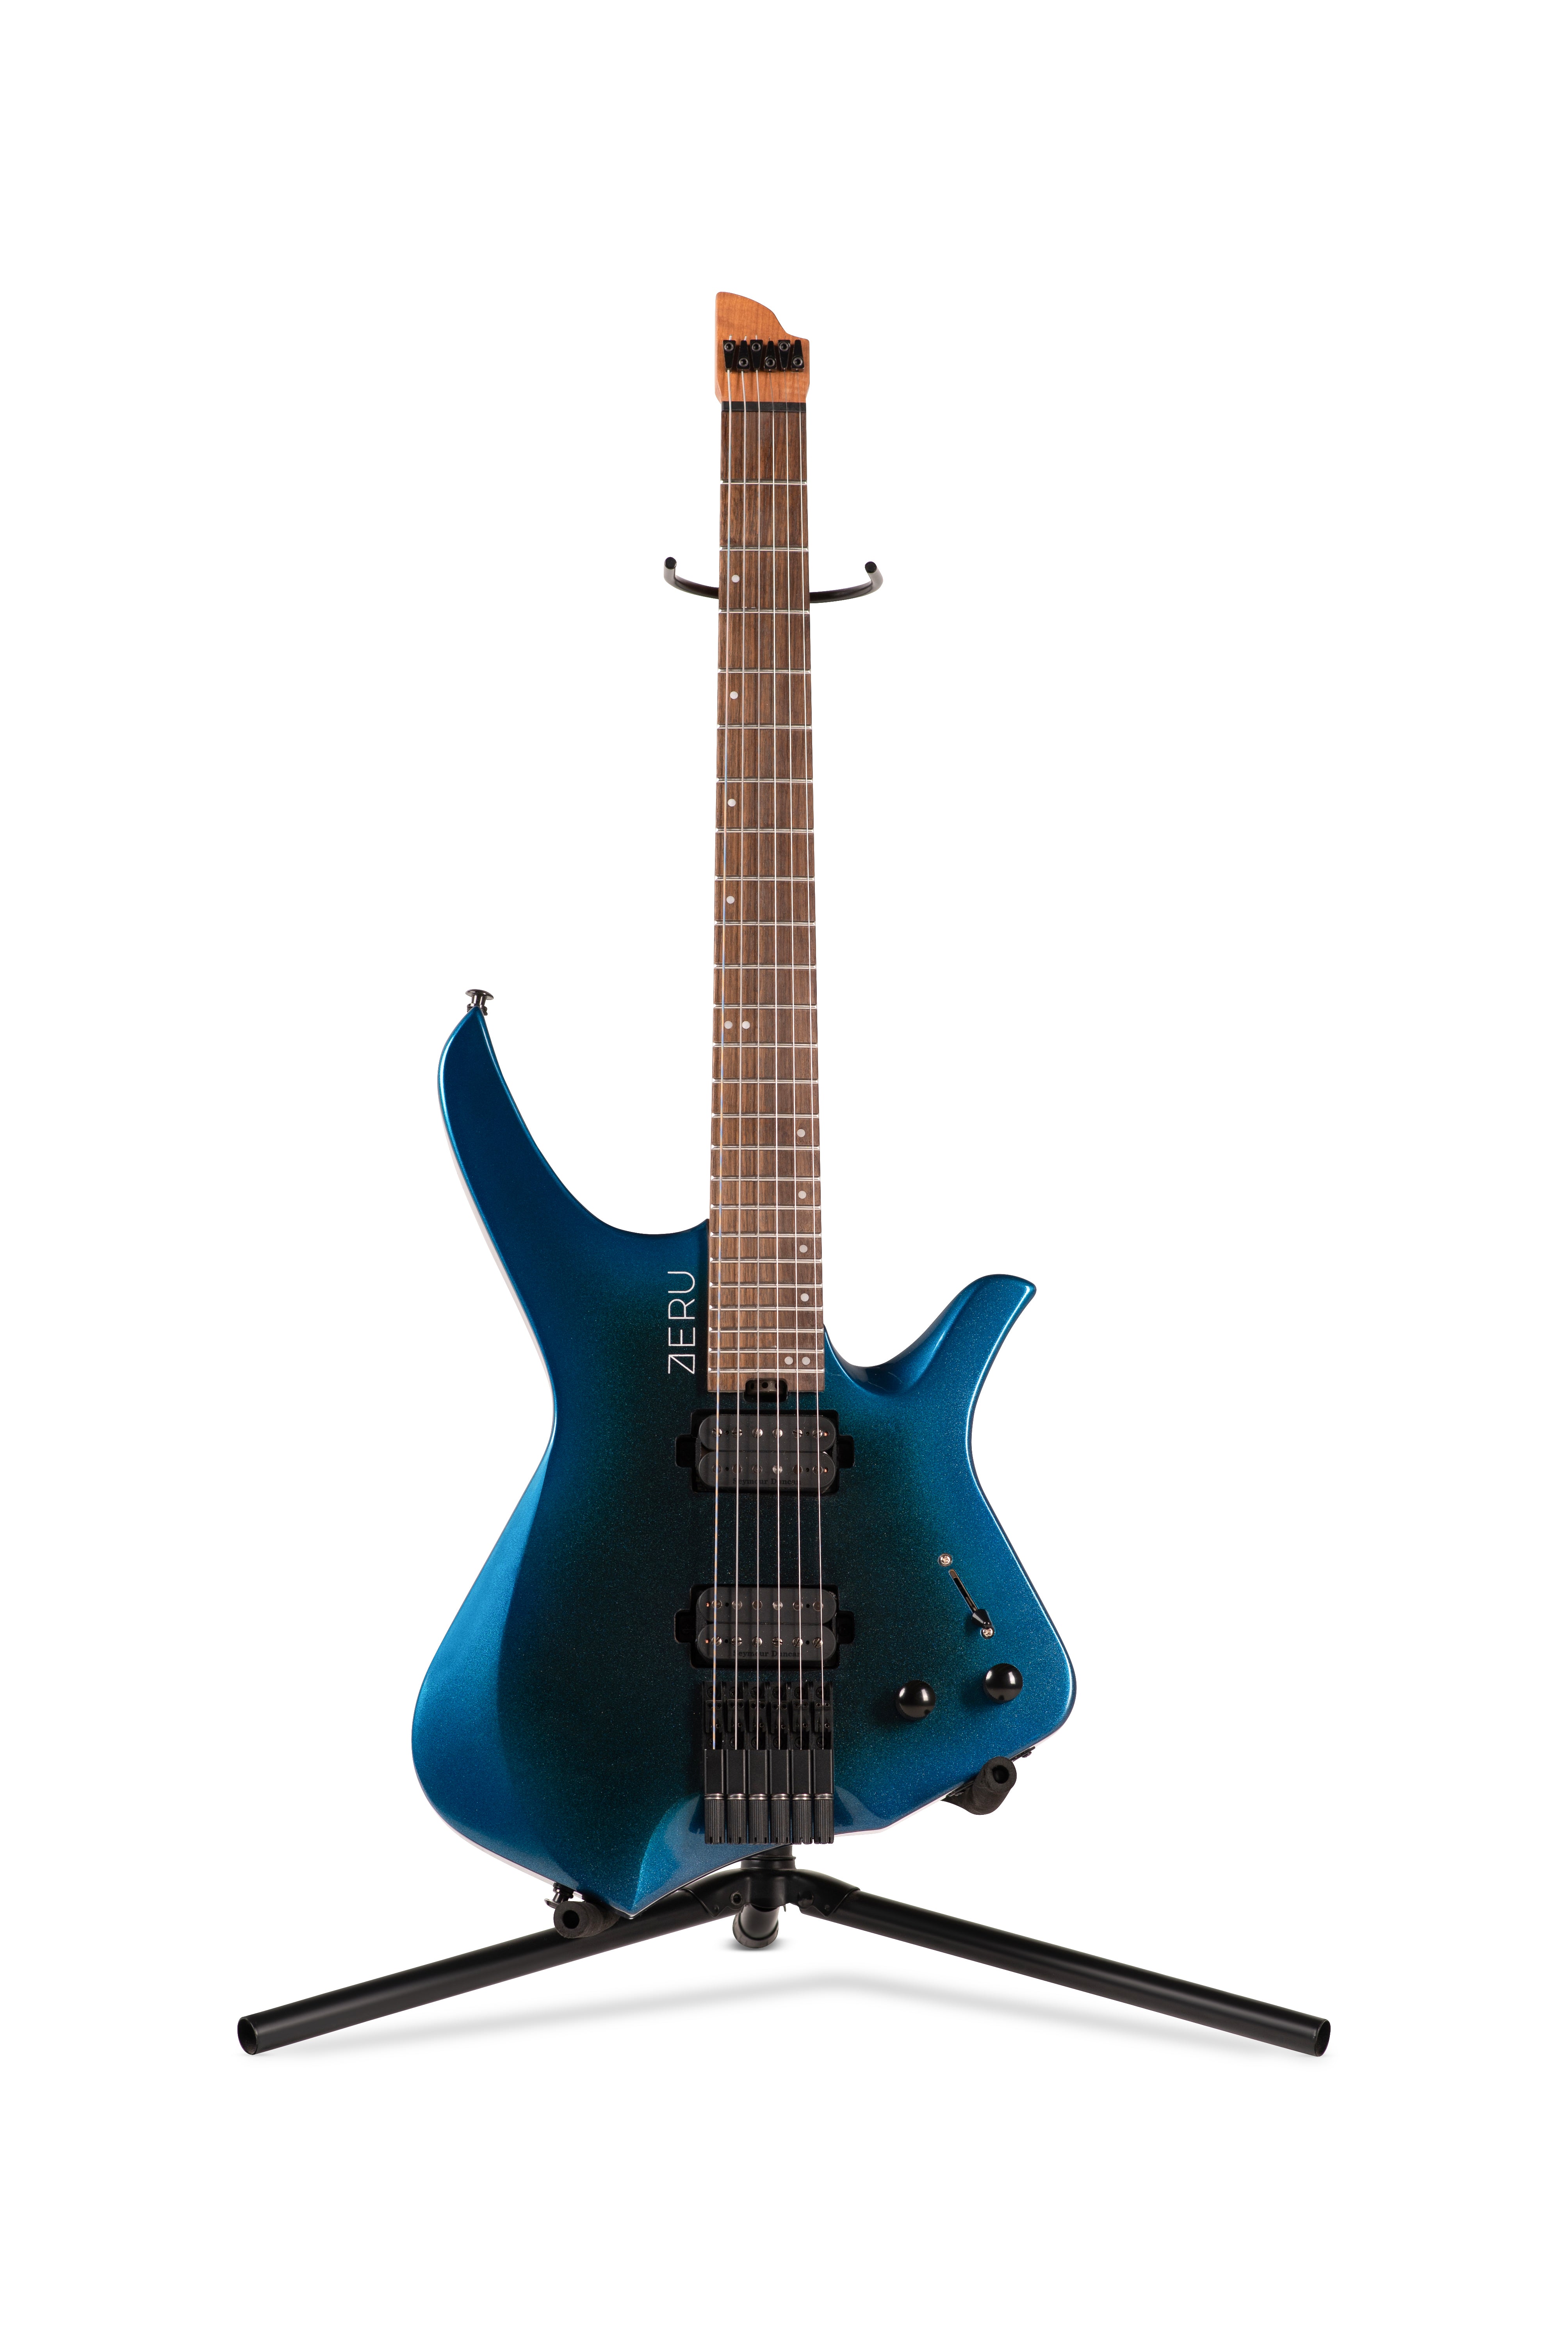 ZERU VOID Series 6 String Headless Guitar in Urdina Nebula